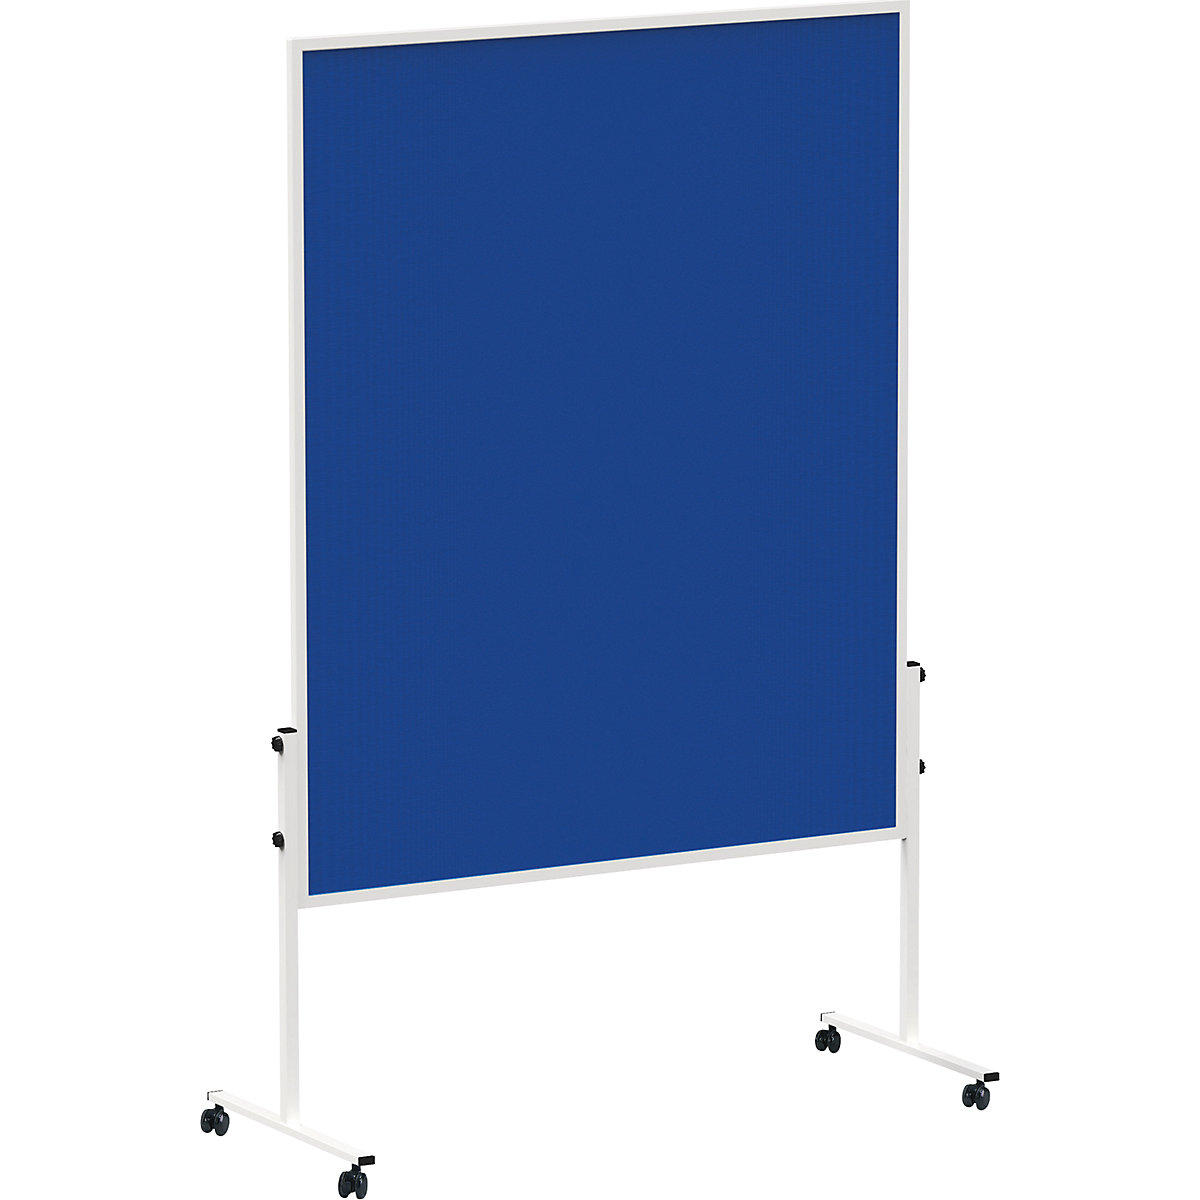 MAUL Moderationstafel, fahrbar, nicht klappbar, Filzfarbe Blau